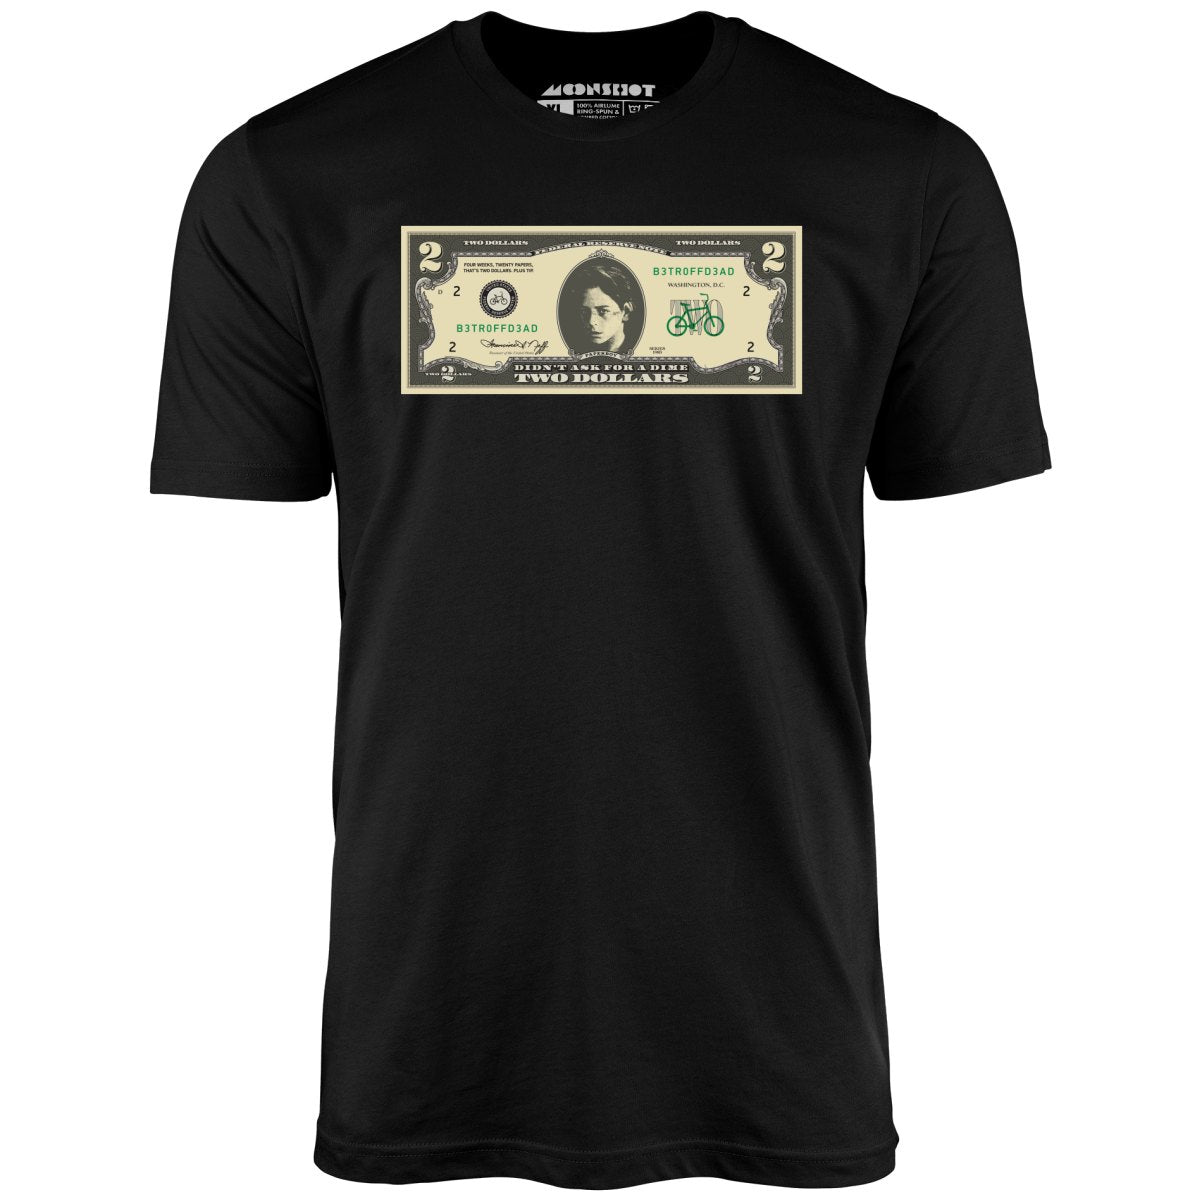 Johnny Two Dollar Bill Parody - Better Off Dead - Unisex T-Shirt